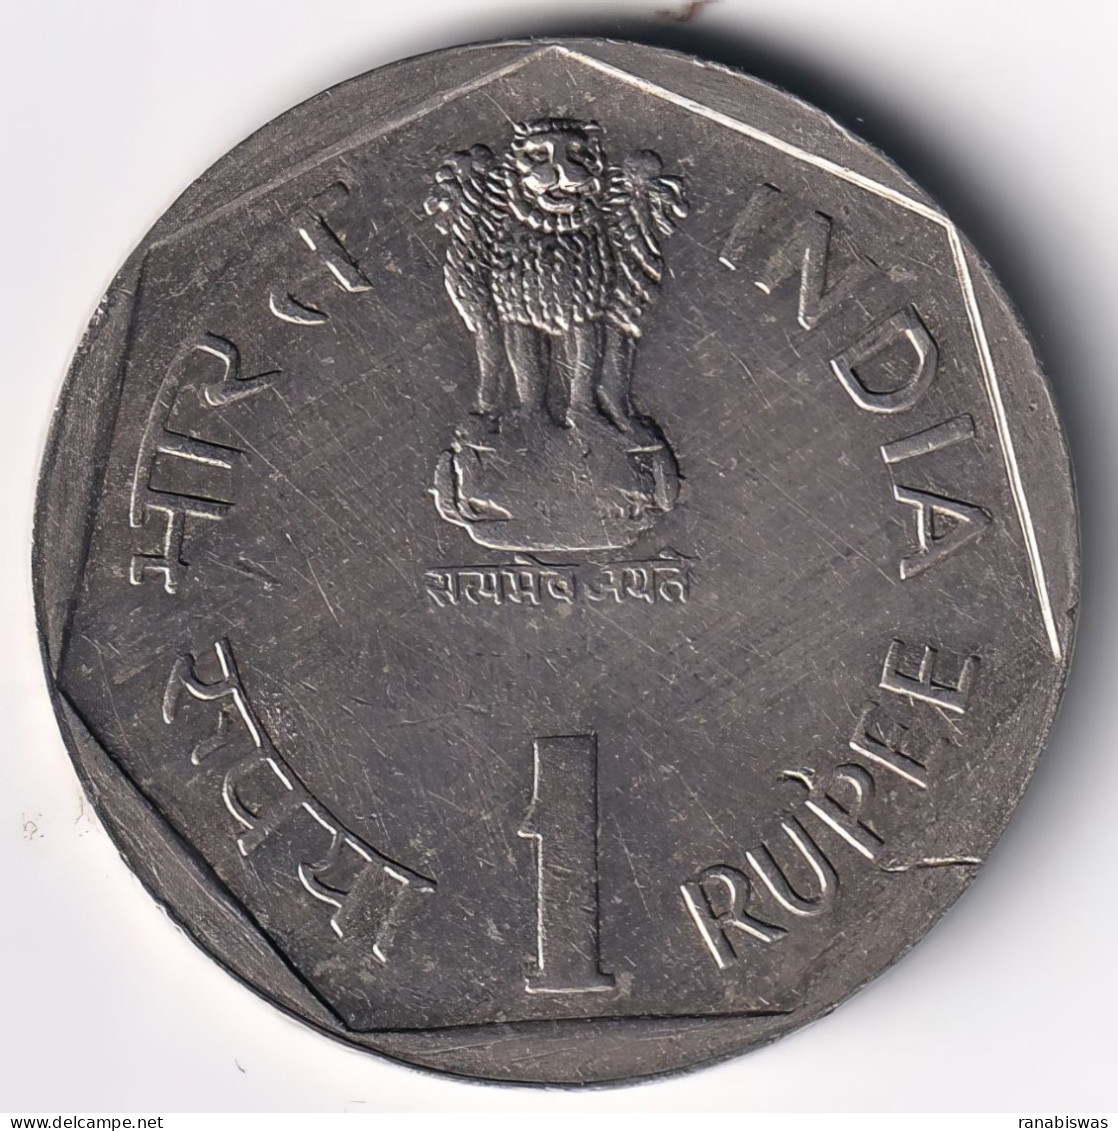 INDIA COIN LOT 3, 1 RUPEE 1985, INTERNATIONAL YOUTH YEAR, CALCUTTA MINT, XF, SACRE - India